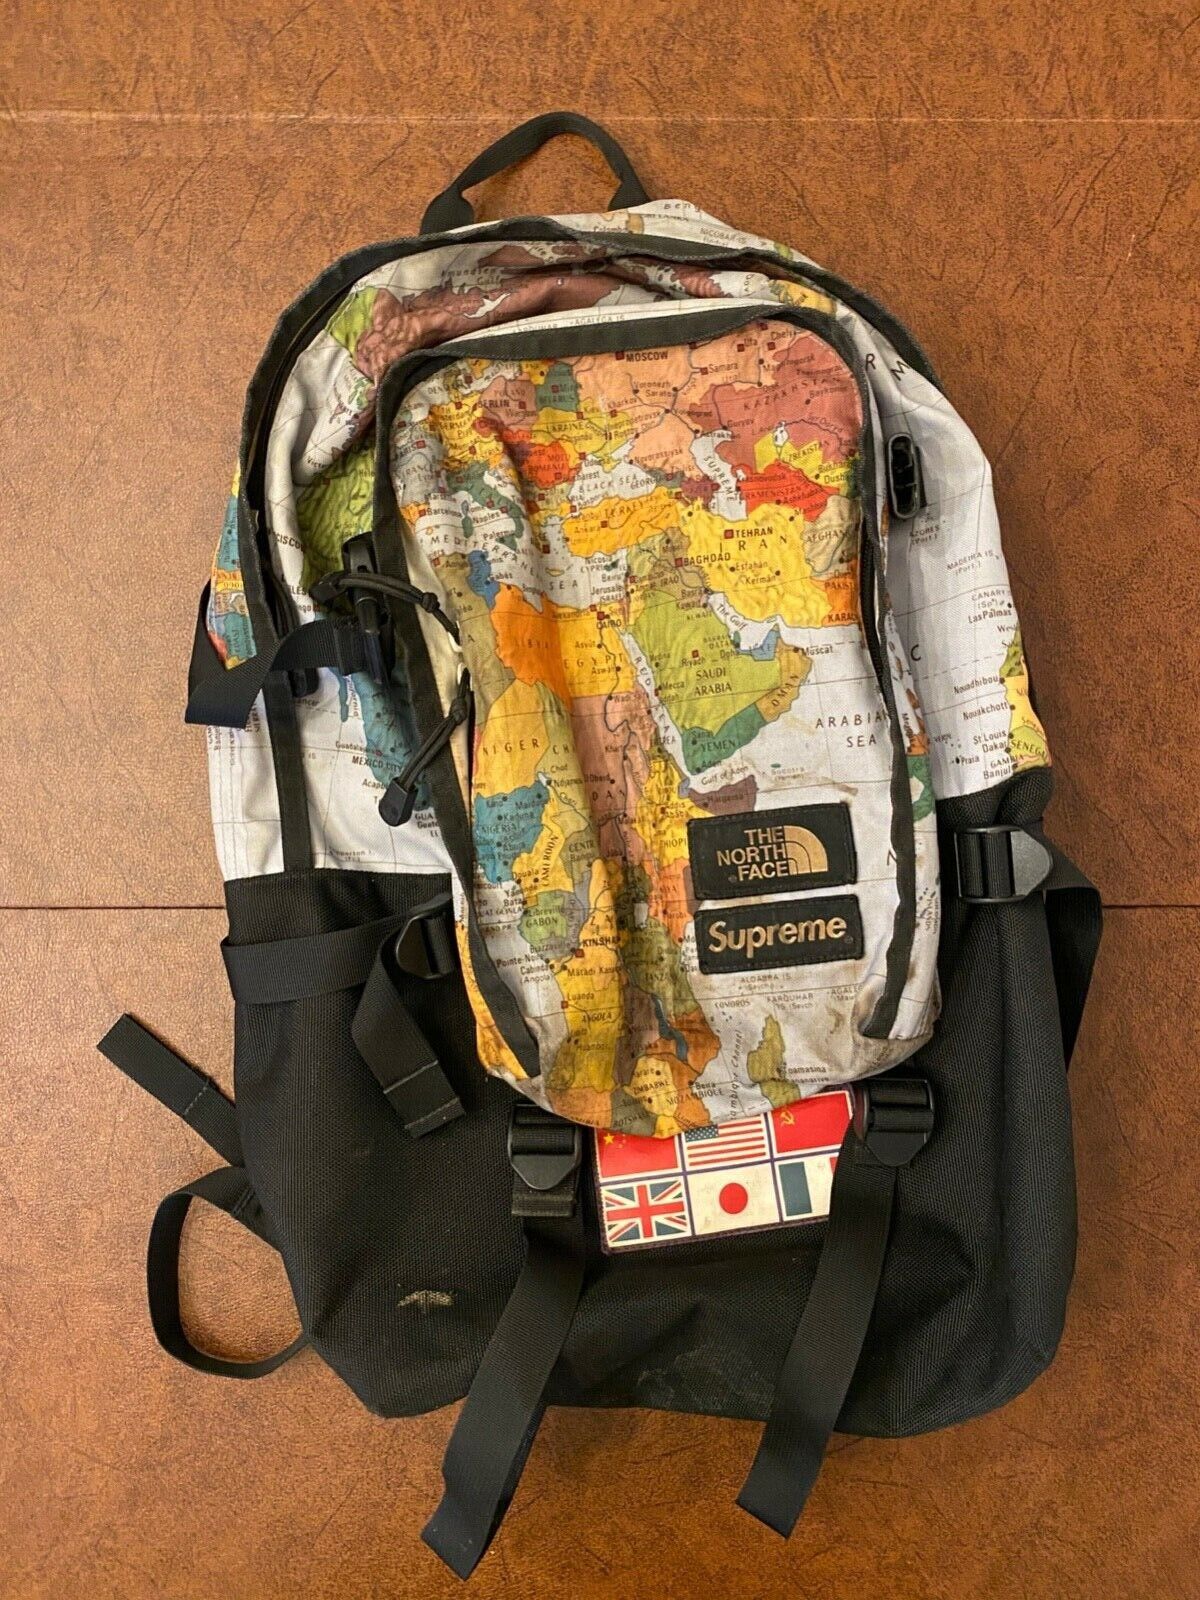 Superioriteit Pelmel trainer Supreme North Face Map Backpack Rucksack | eBay